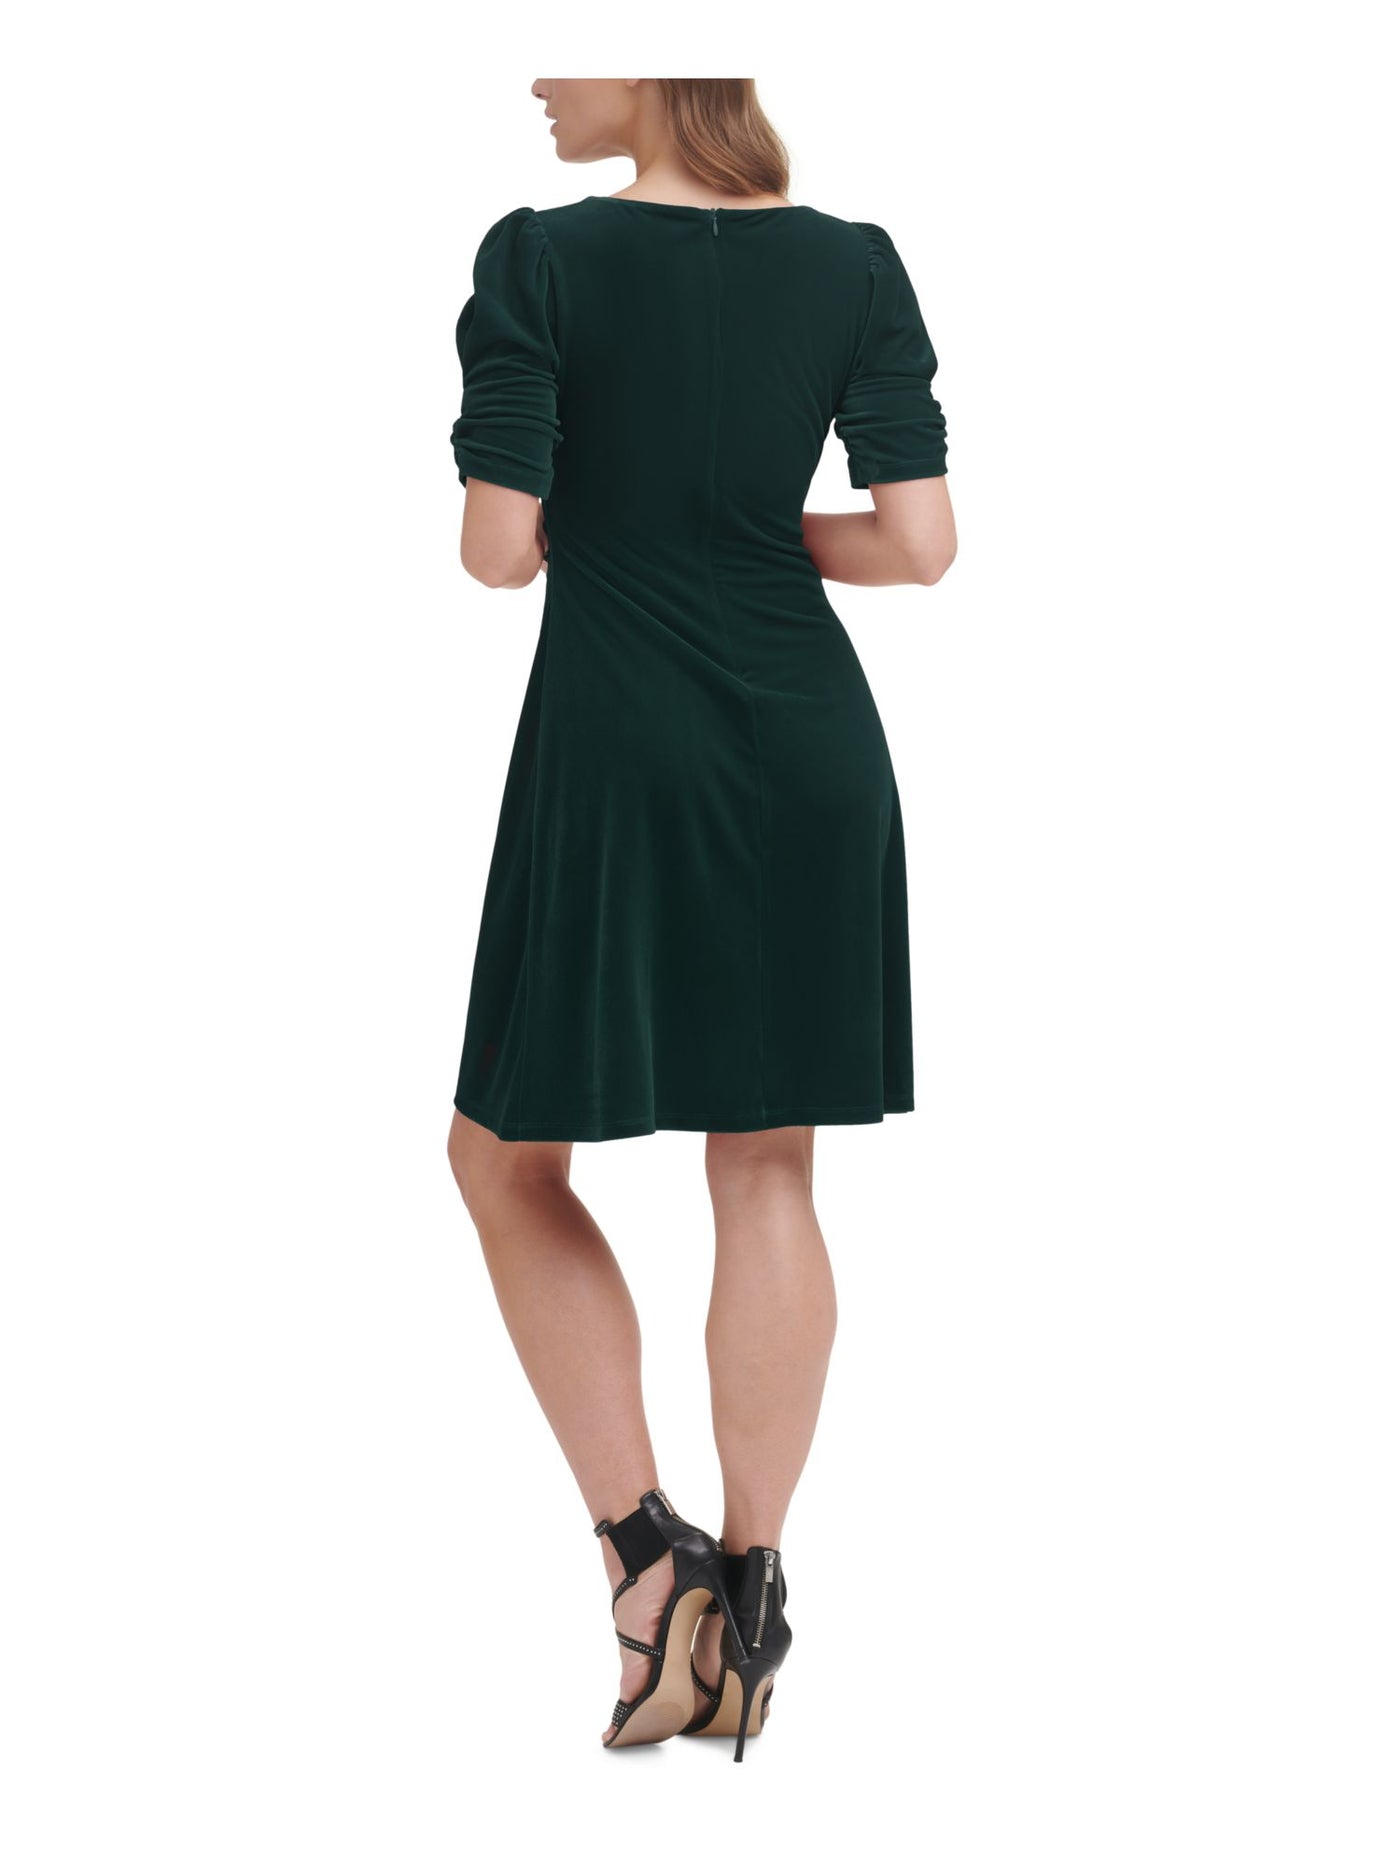 DKNY Womens Green Ruched Zippered Velvet Textured Pouf Sleeve V Neck Knee Length Party Sheath Dress 14